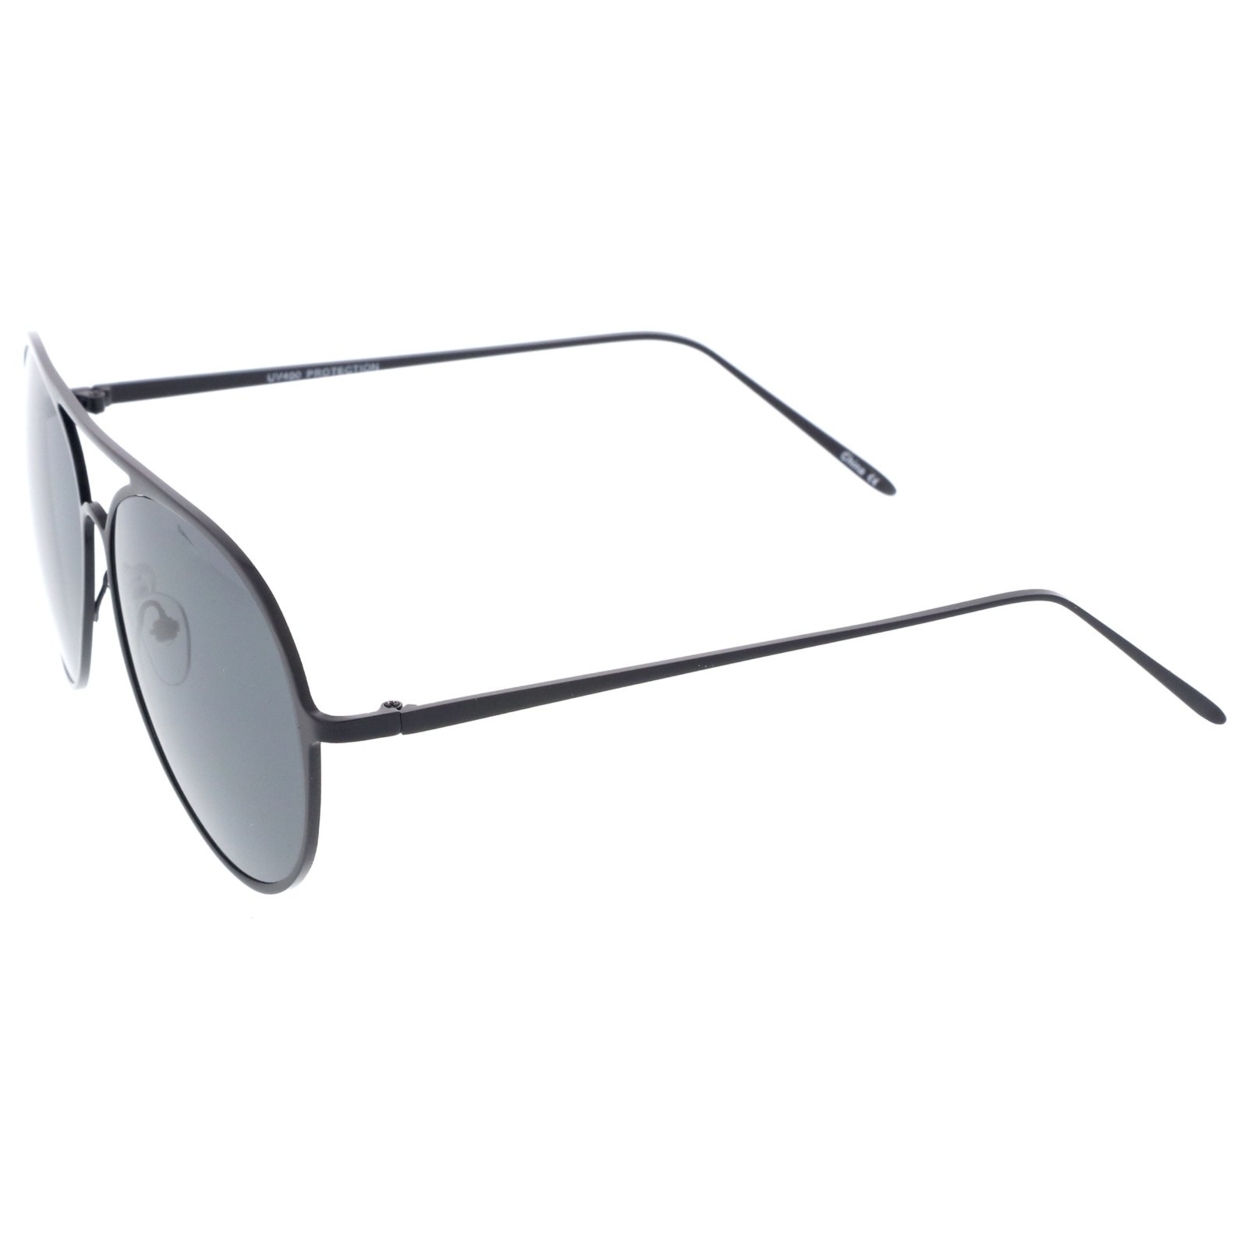 Oversize Metal Frame Double Nose Bridge Slim Temple Aviator Sunglasses 58mm - Shiny Silver / Lavender